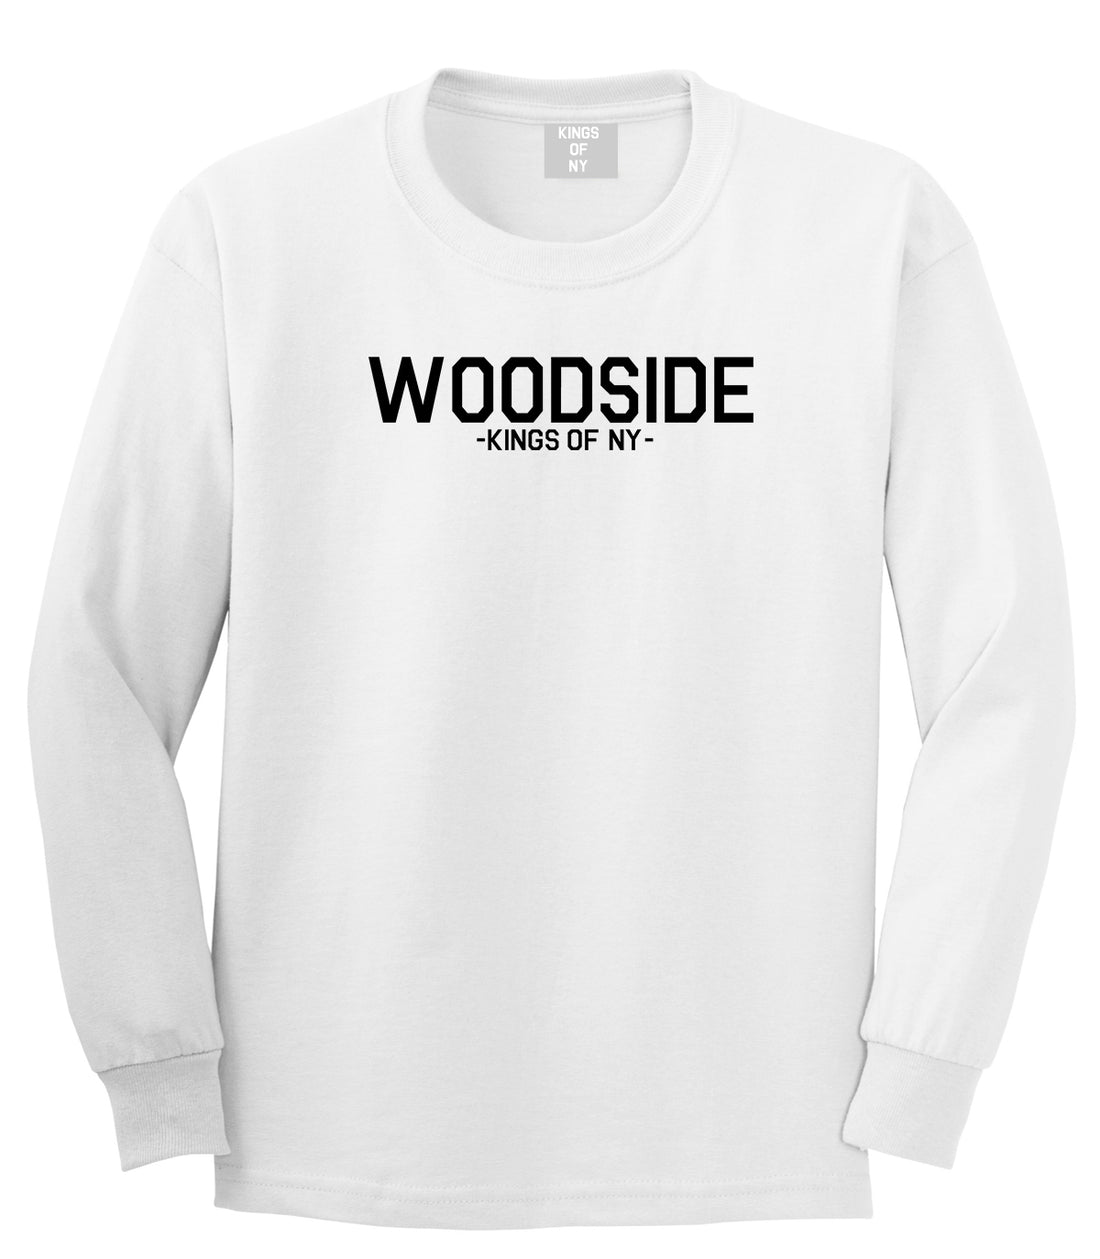 Woodside Queens New York Mens Long Sleeve T-Shirt White